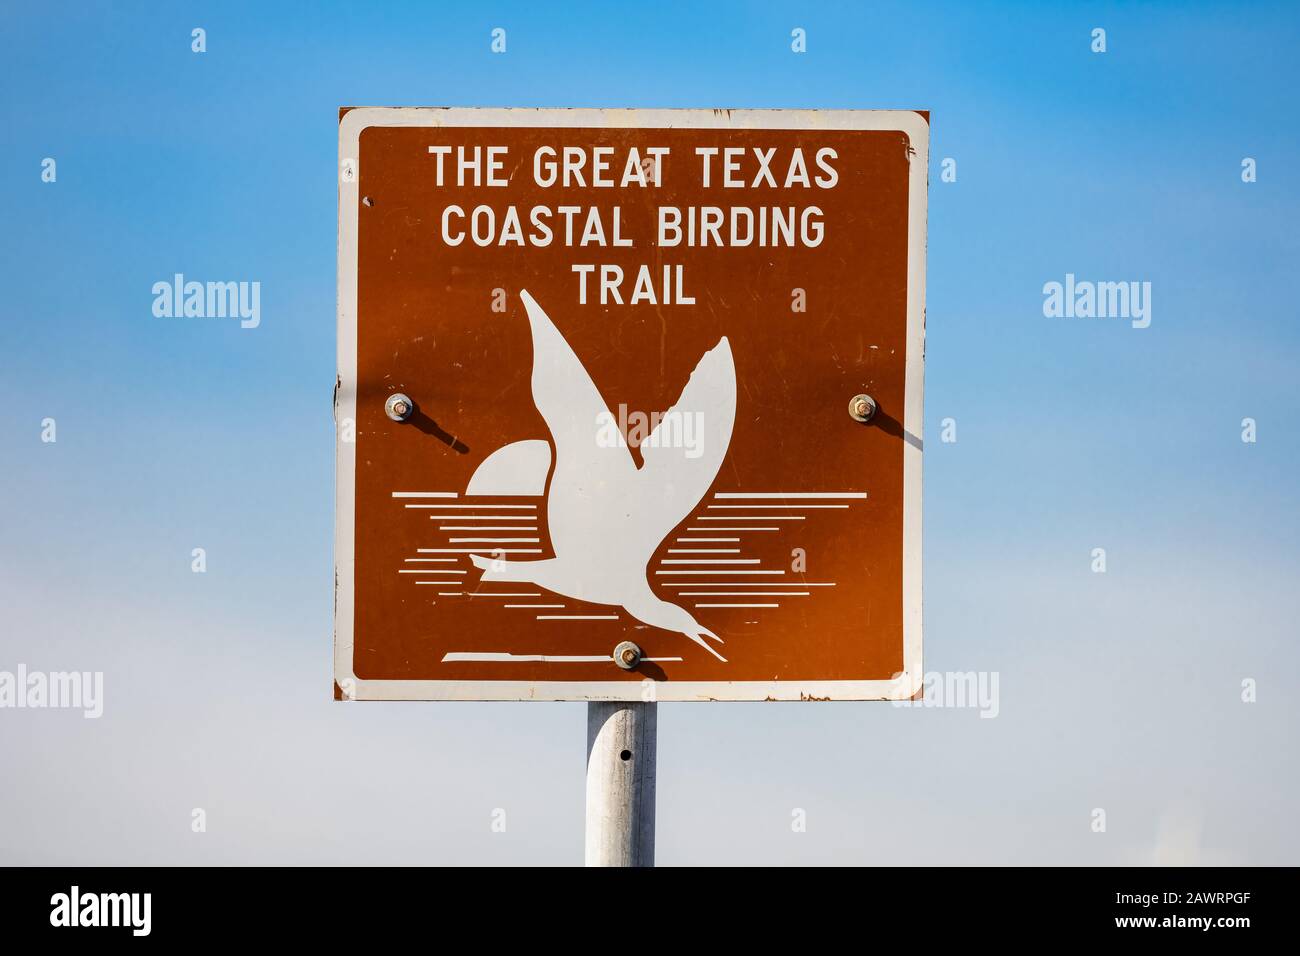 Sign for the Great Texas Coastal Birding Trail near Houston, Texas, USA. Stock Photo